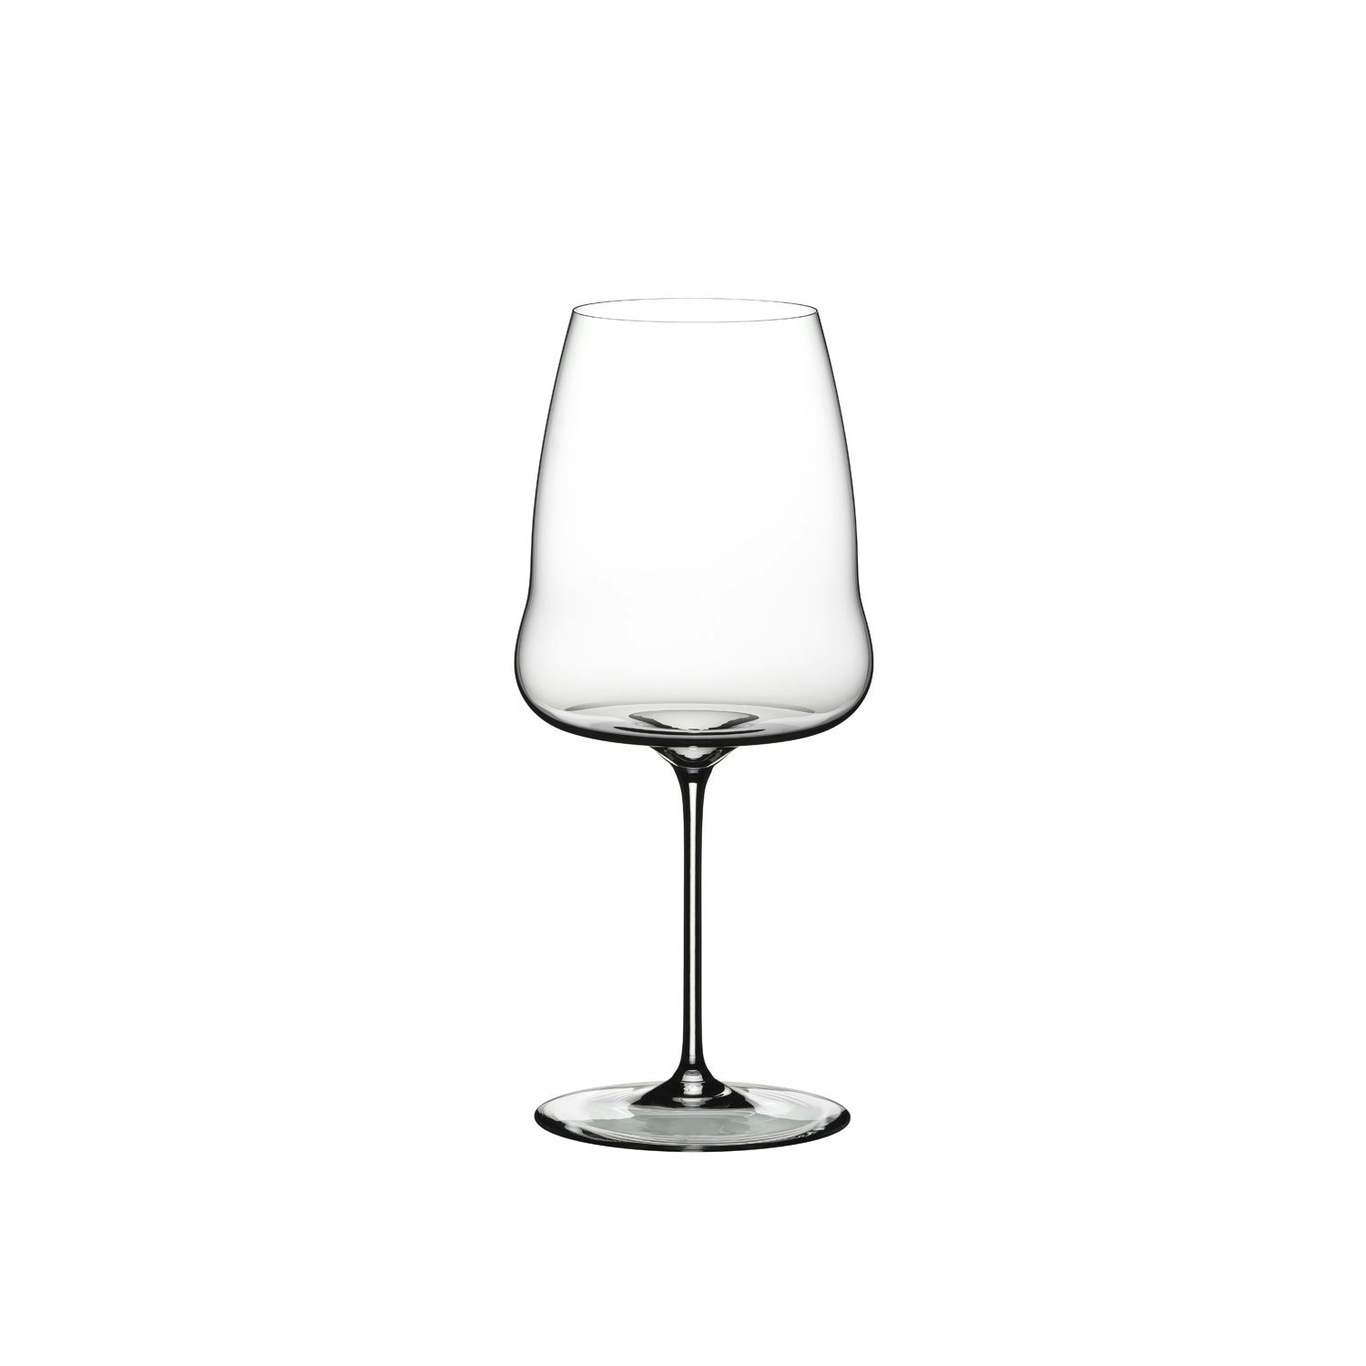 https://royaldesign.com/image/11/riedel-winewings-syrah-shiraz-wine-glass-2?w=800&quality=80